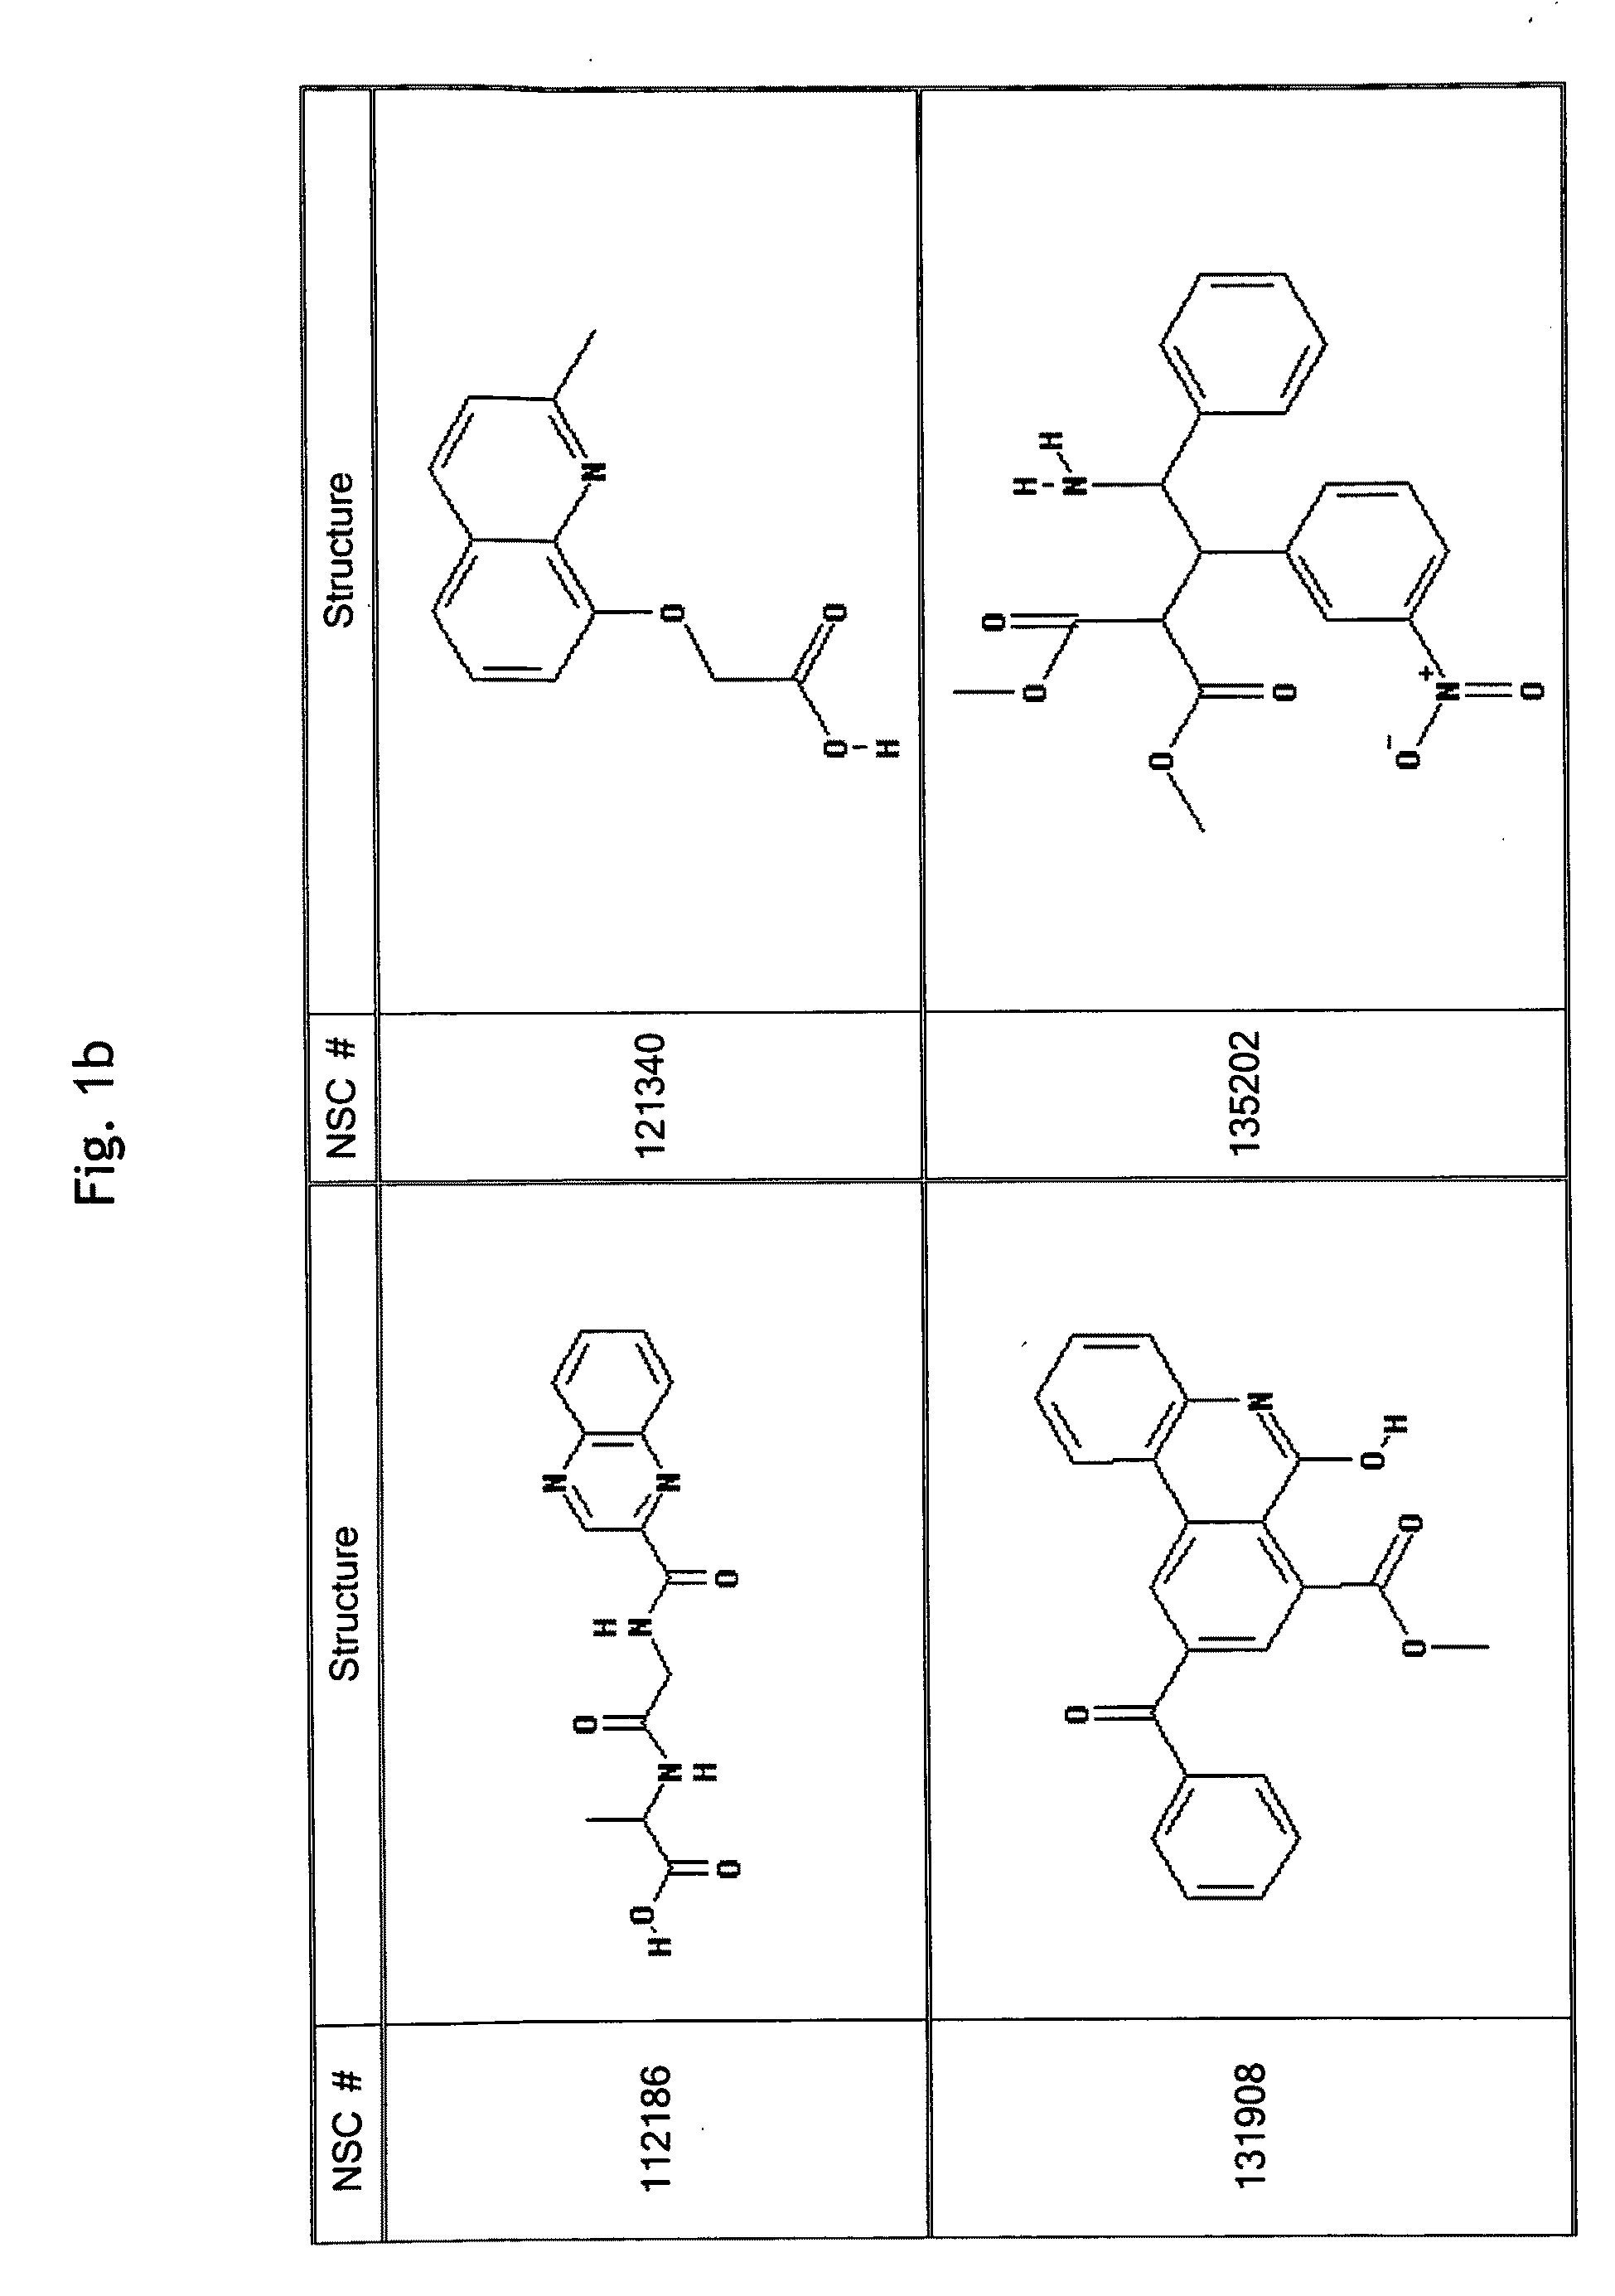 GPCR Ligands Identified by Computational Modeling